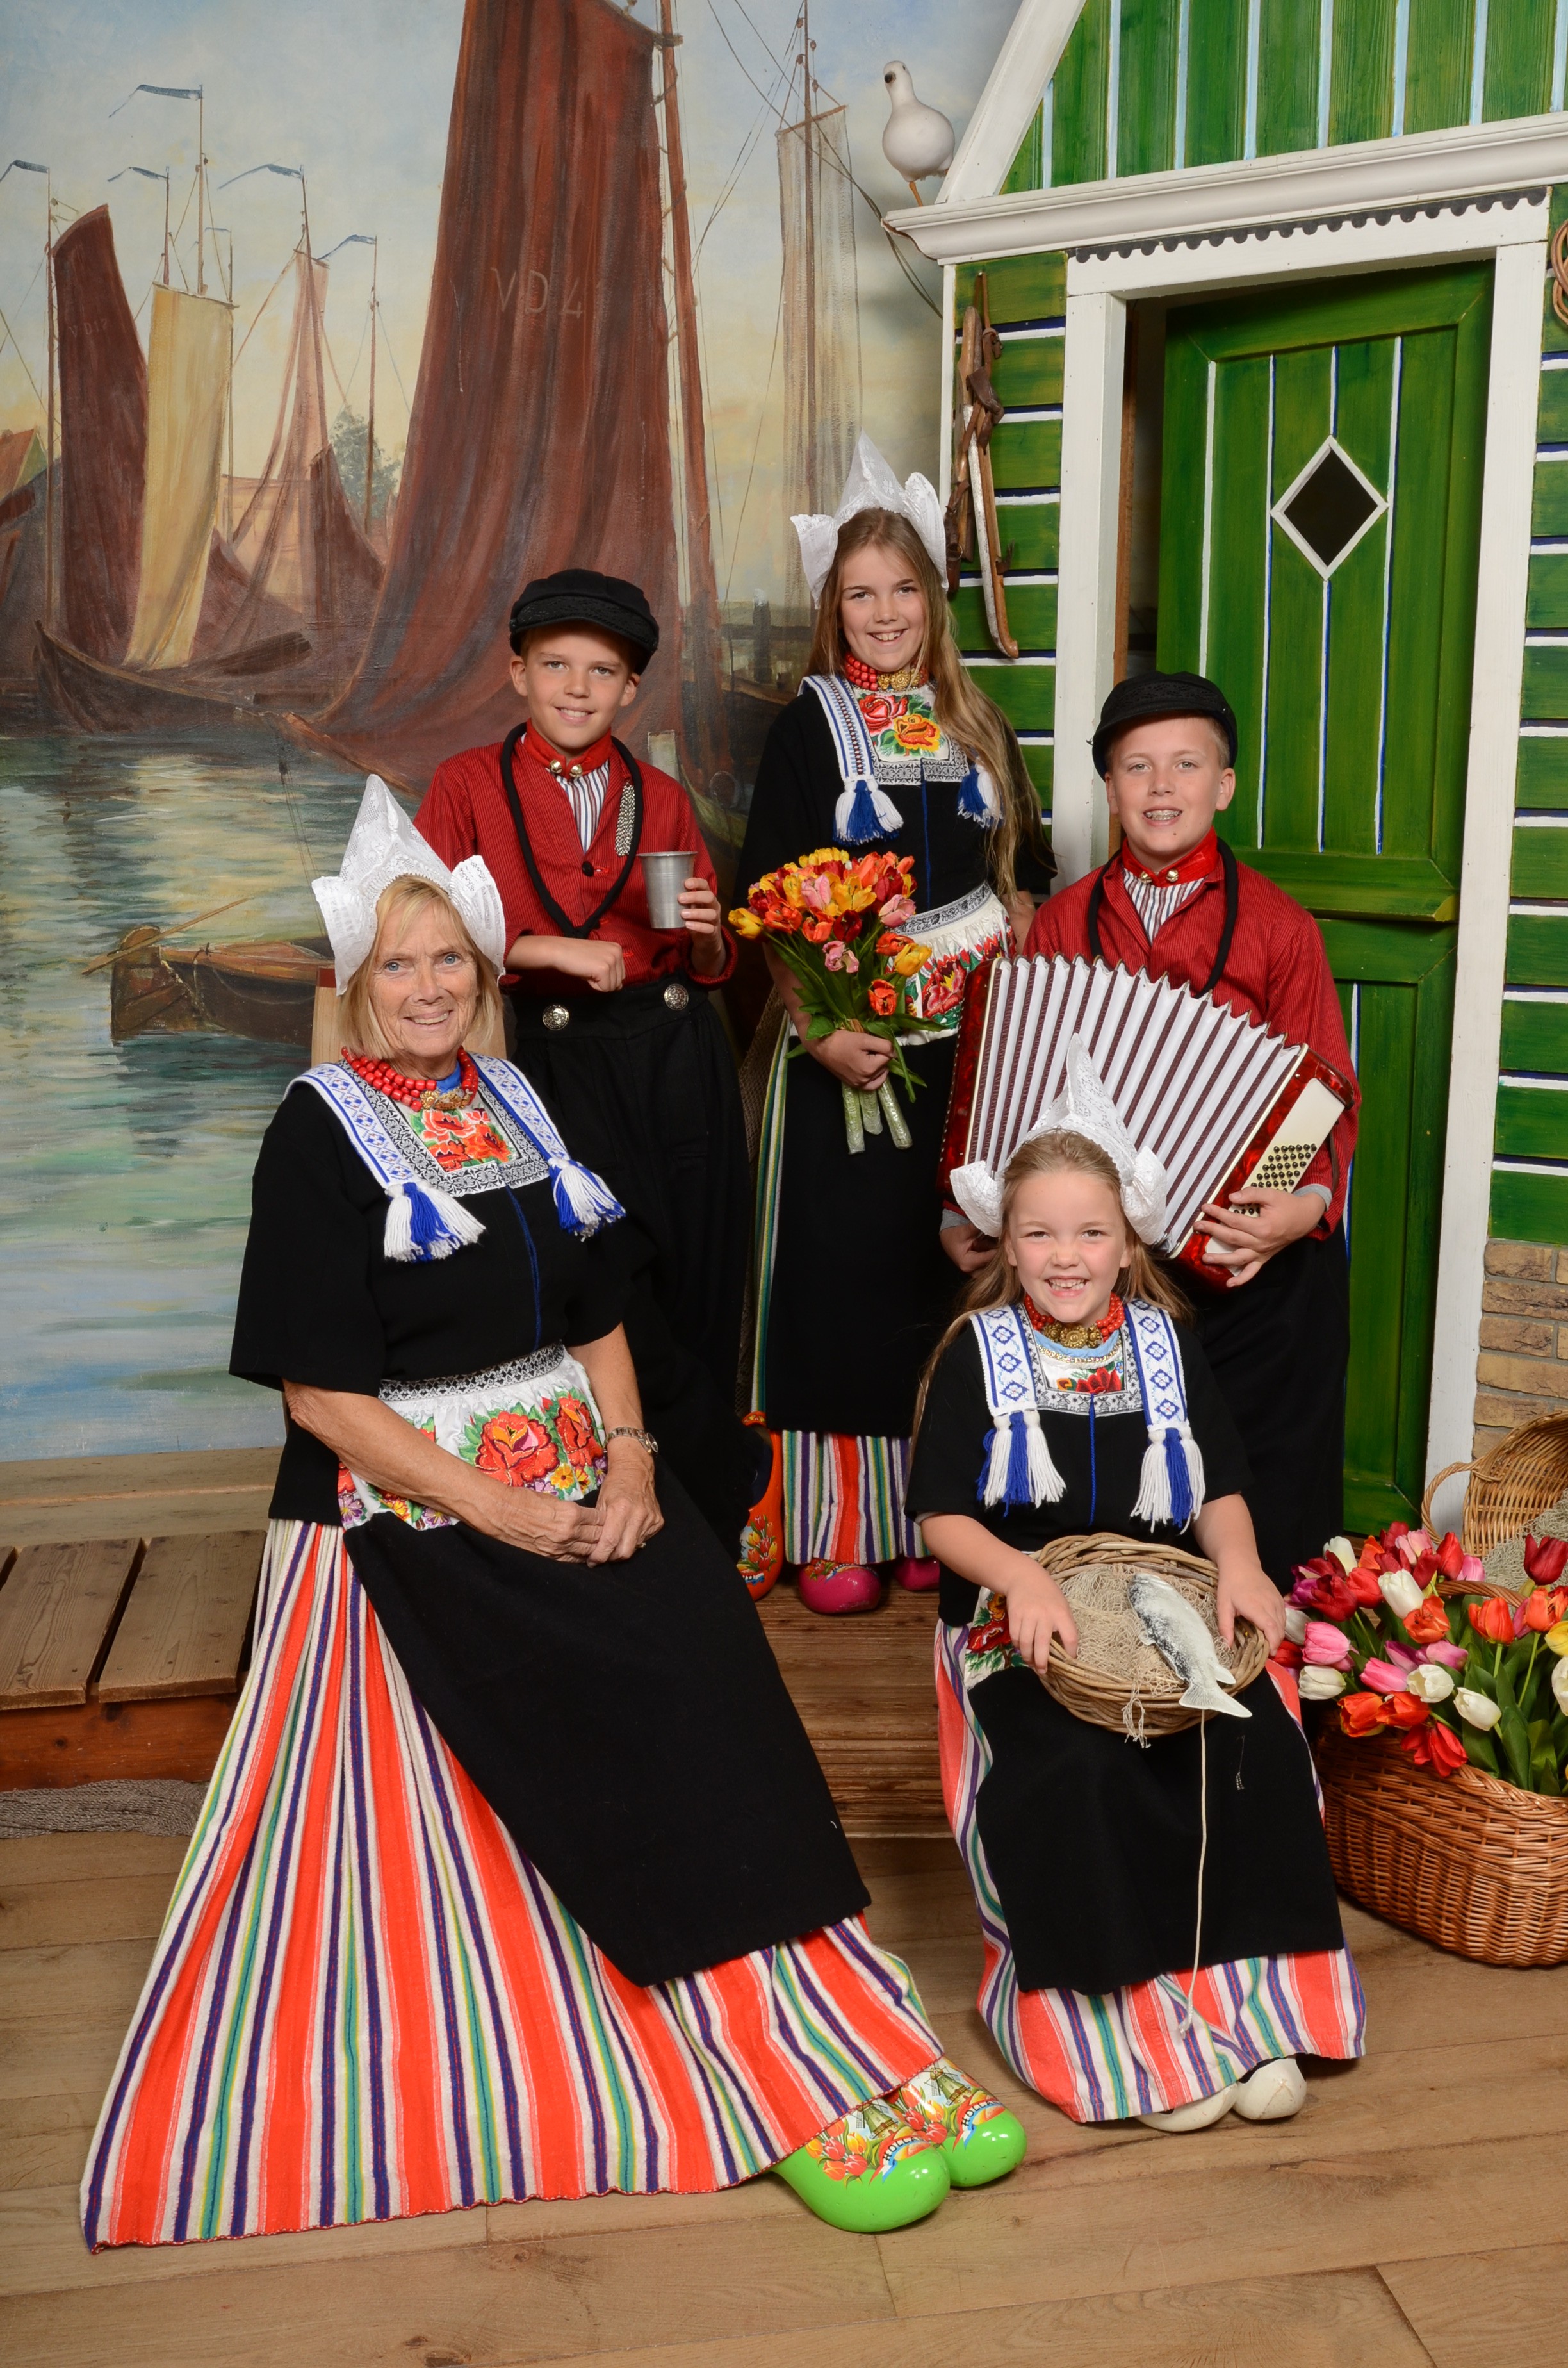 Mom and kids in Volendam costume